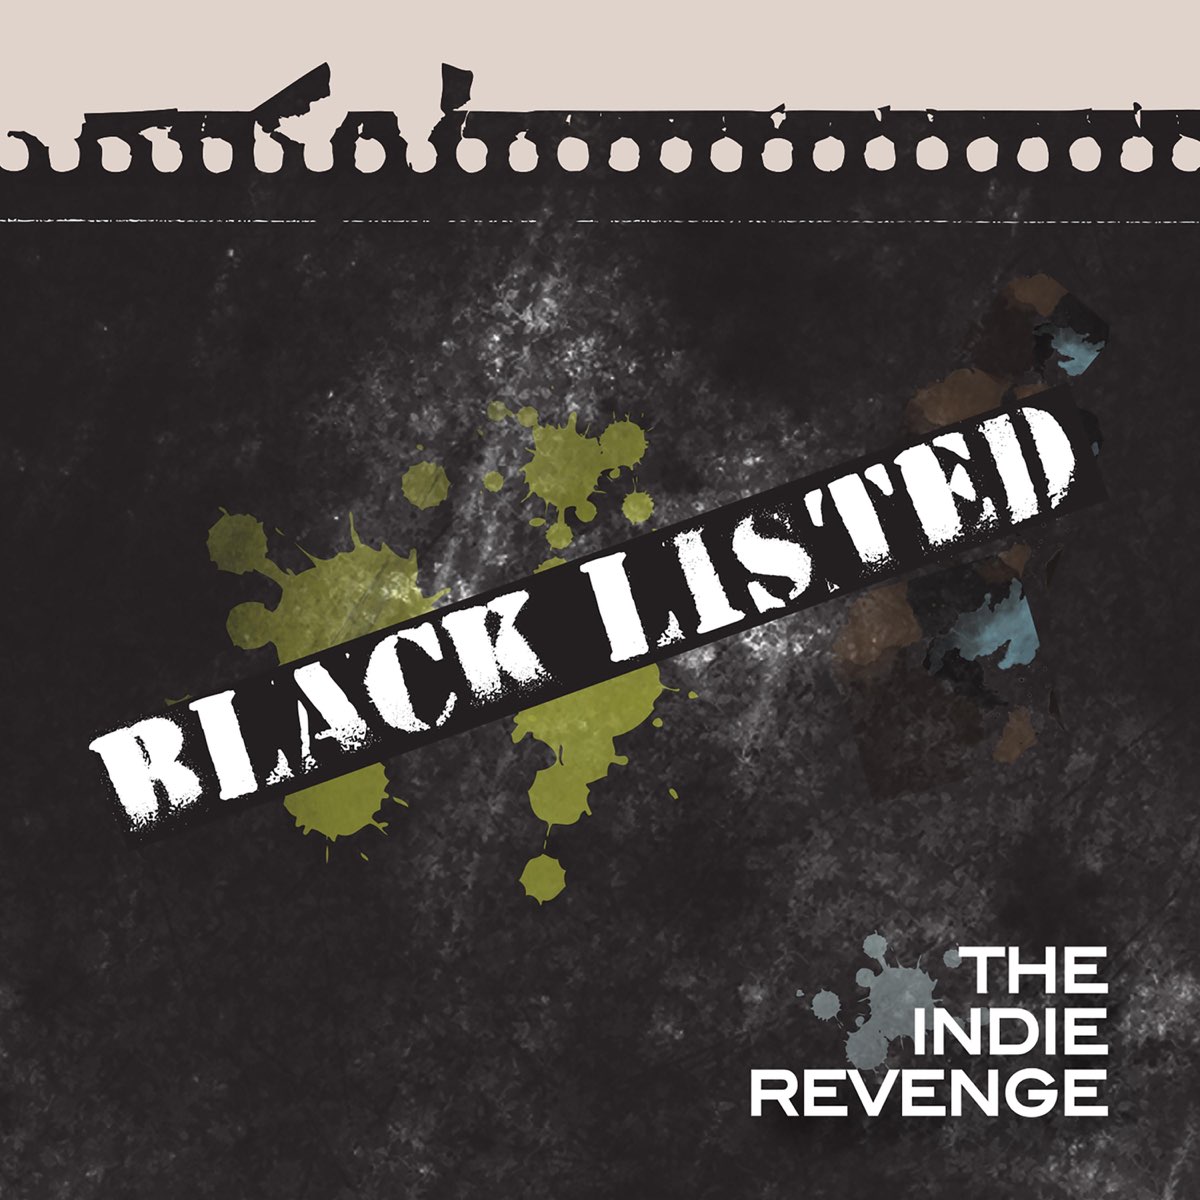 Альбом Revenge face. Blacklisted. Песня Revenge.